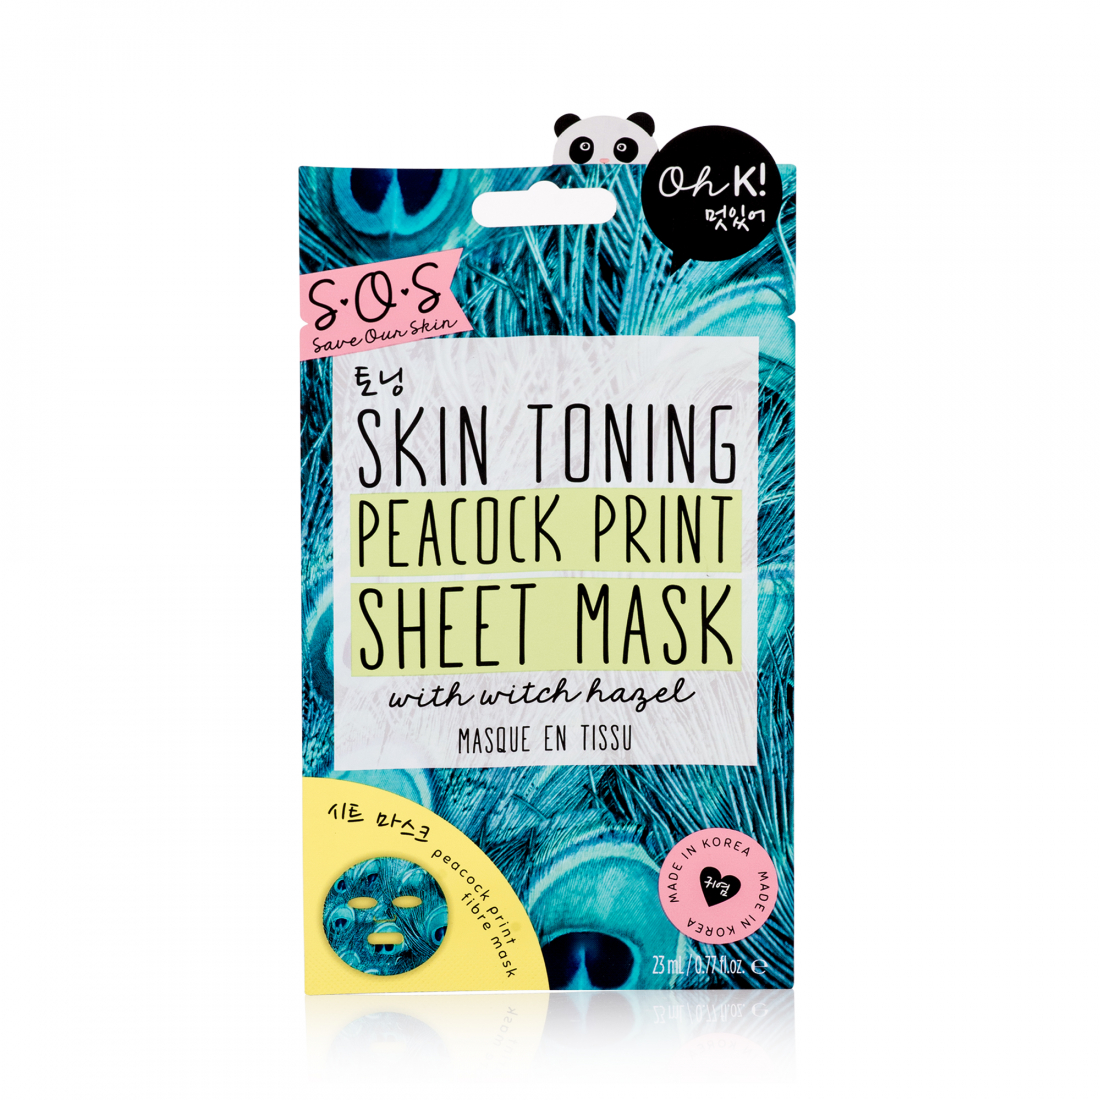 'SOS Skin Toning Peacock Print' Gesichtsmaske aus Gewebe - 23 ml